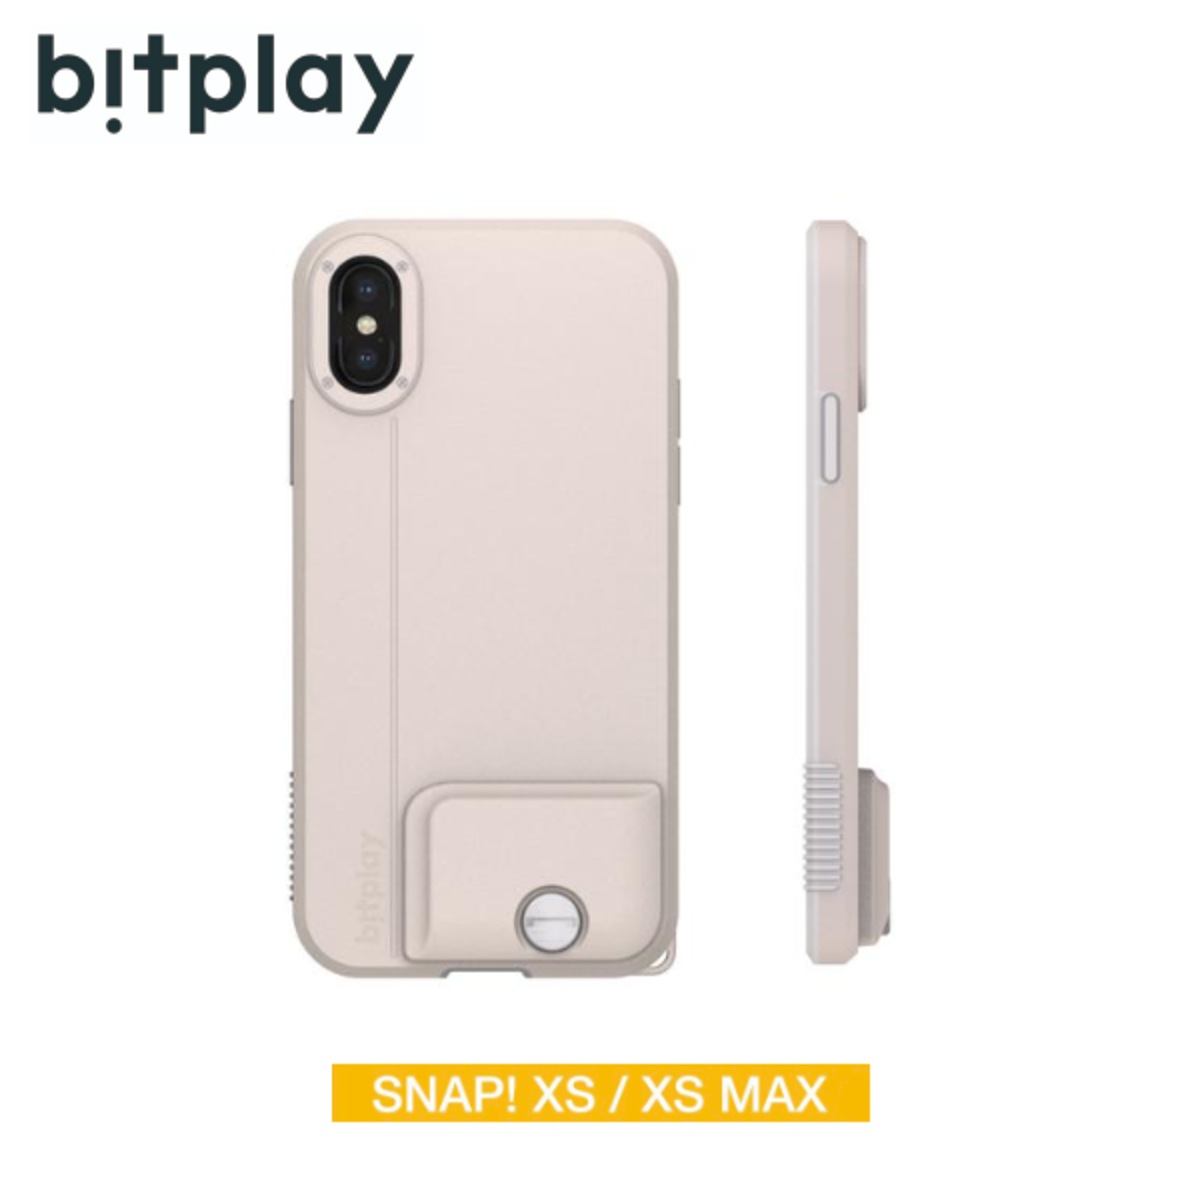 Bitplay - SNAP! iPhone XS/XS Max fully covered lightweight anti-fall camera case - Khaki White